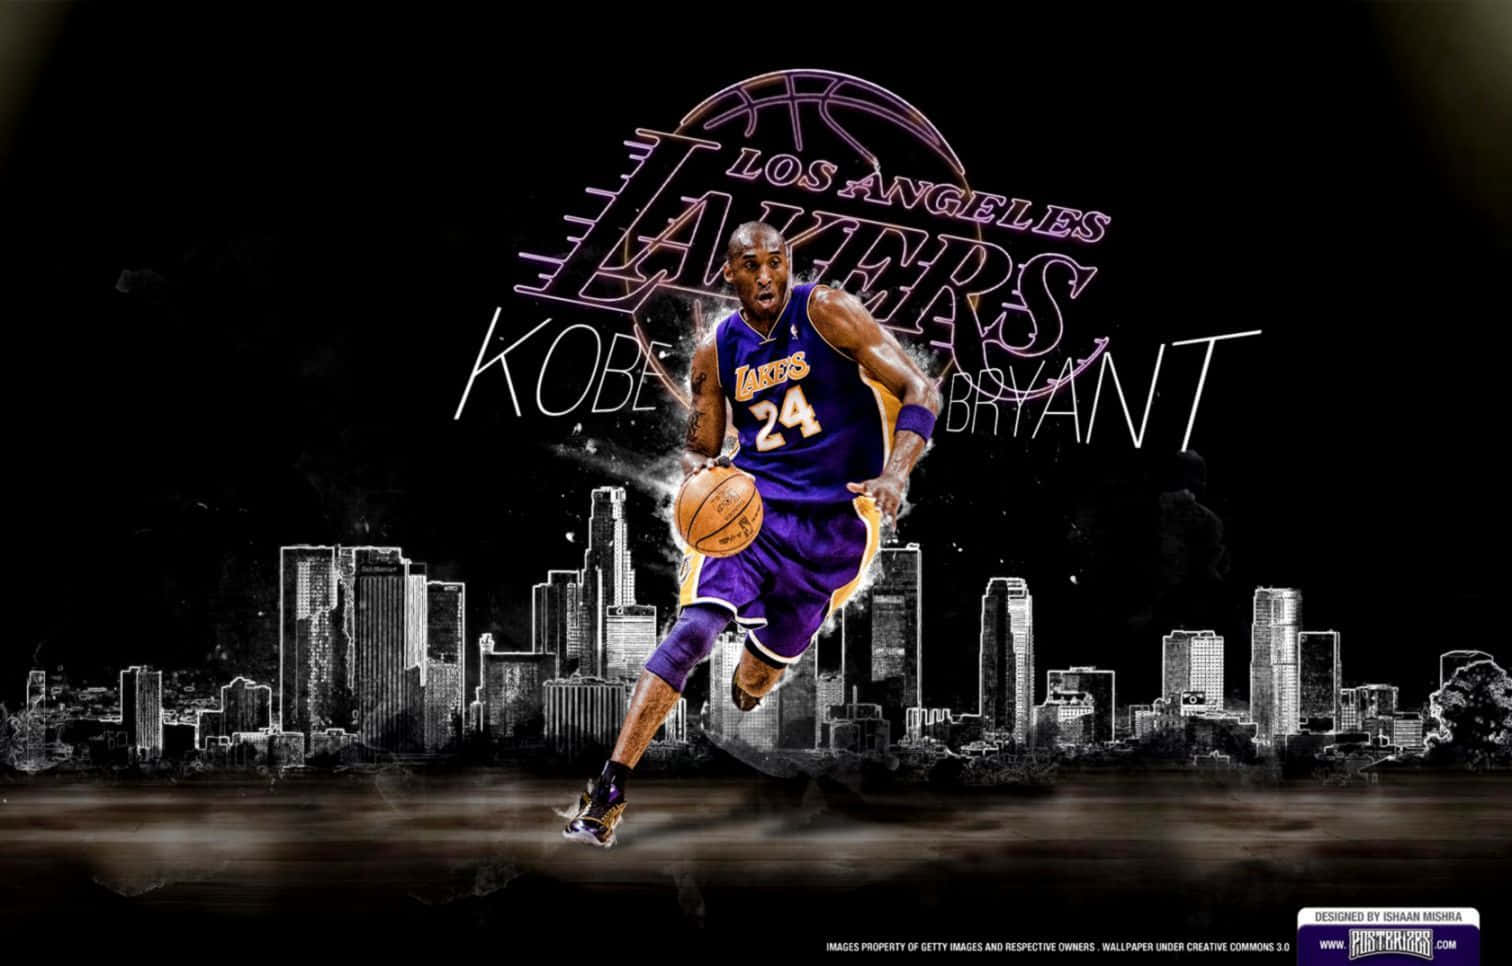 Legendary basketball player Kobe Bryant